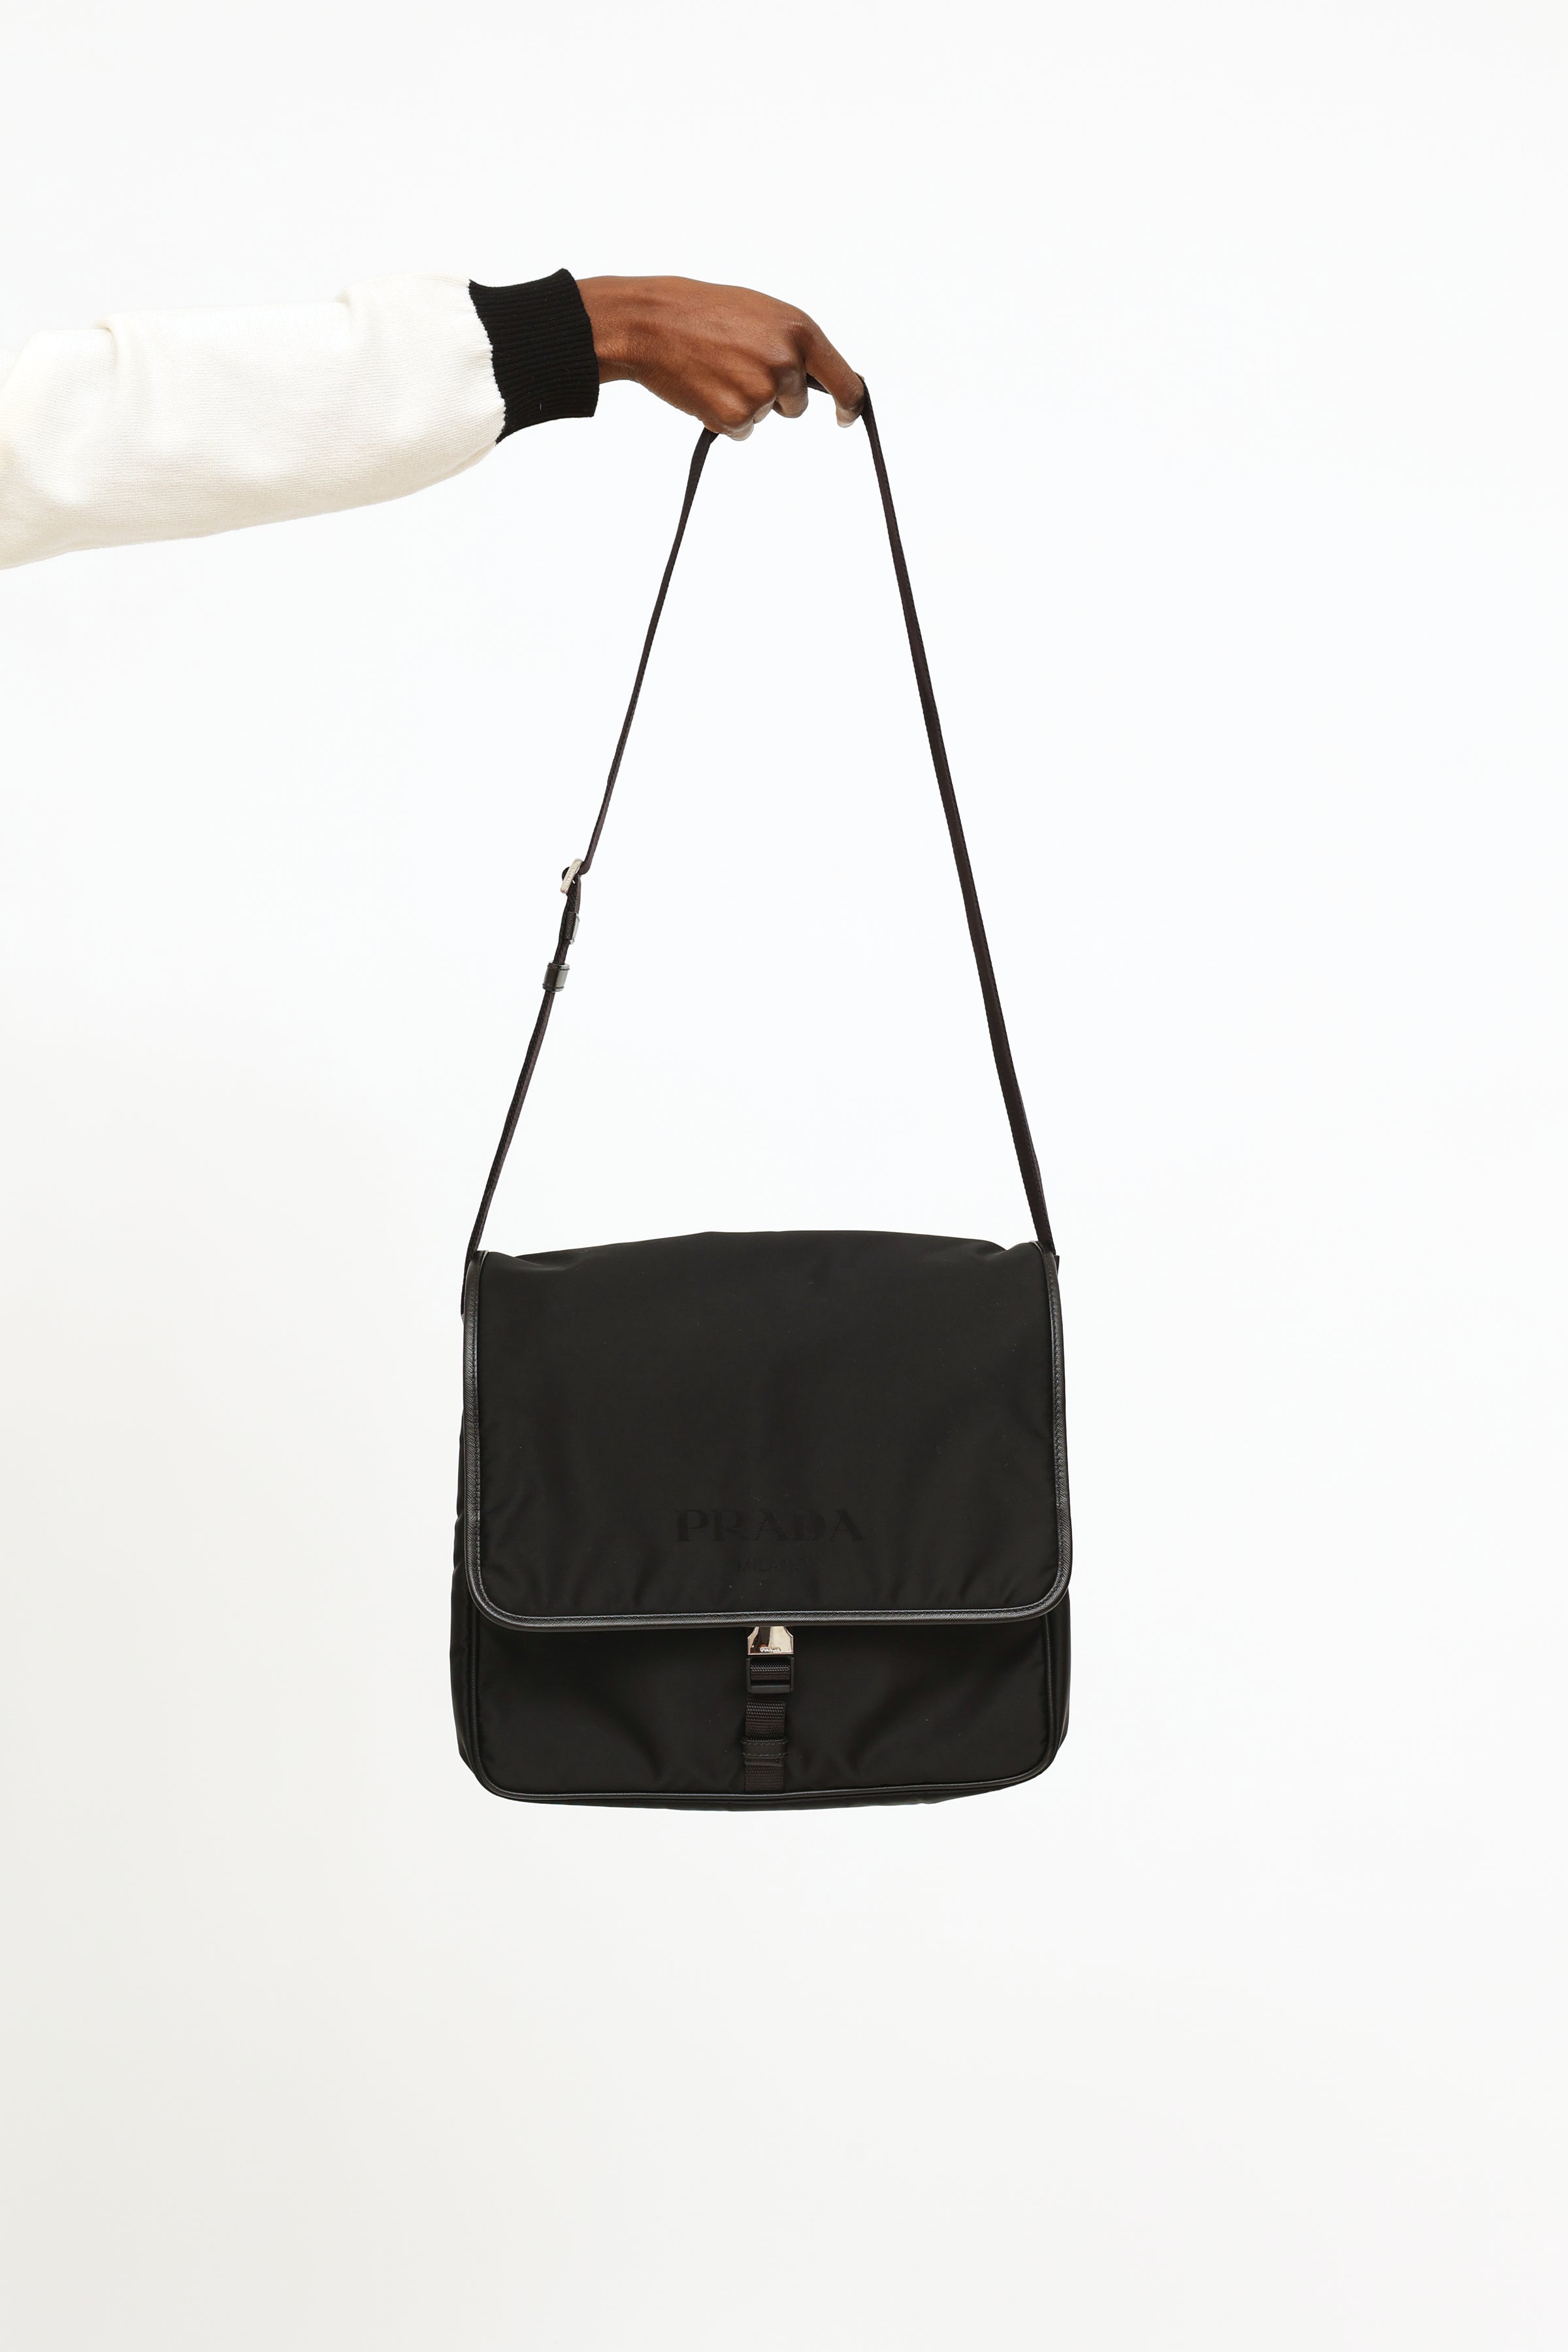 PRADA Tessuto Nylon Saffiano Messenger Bag Black | FASHIONPHILE